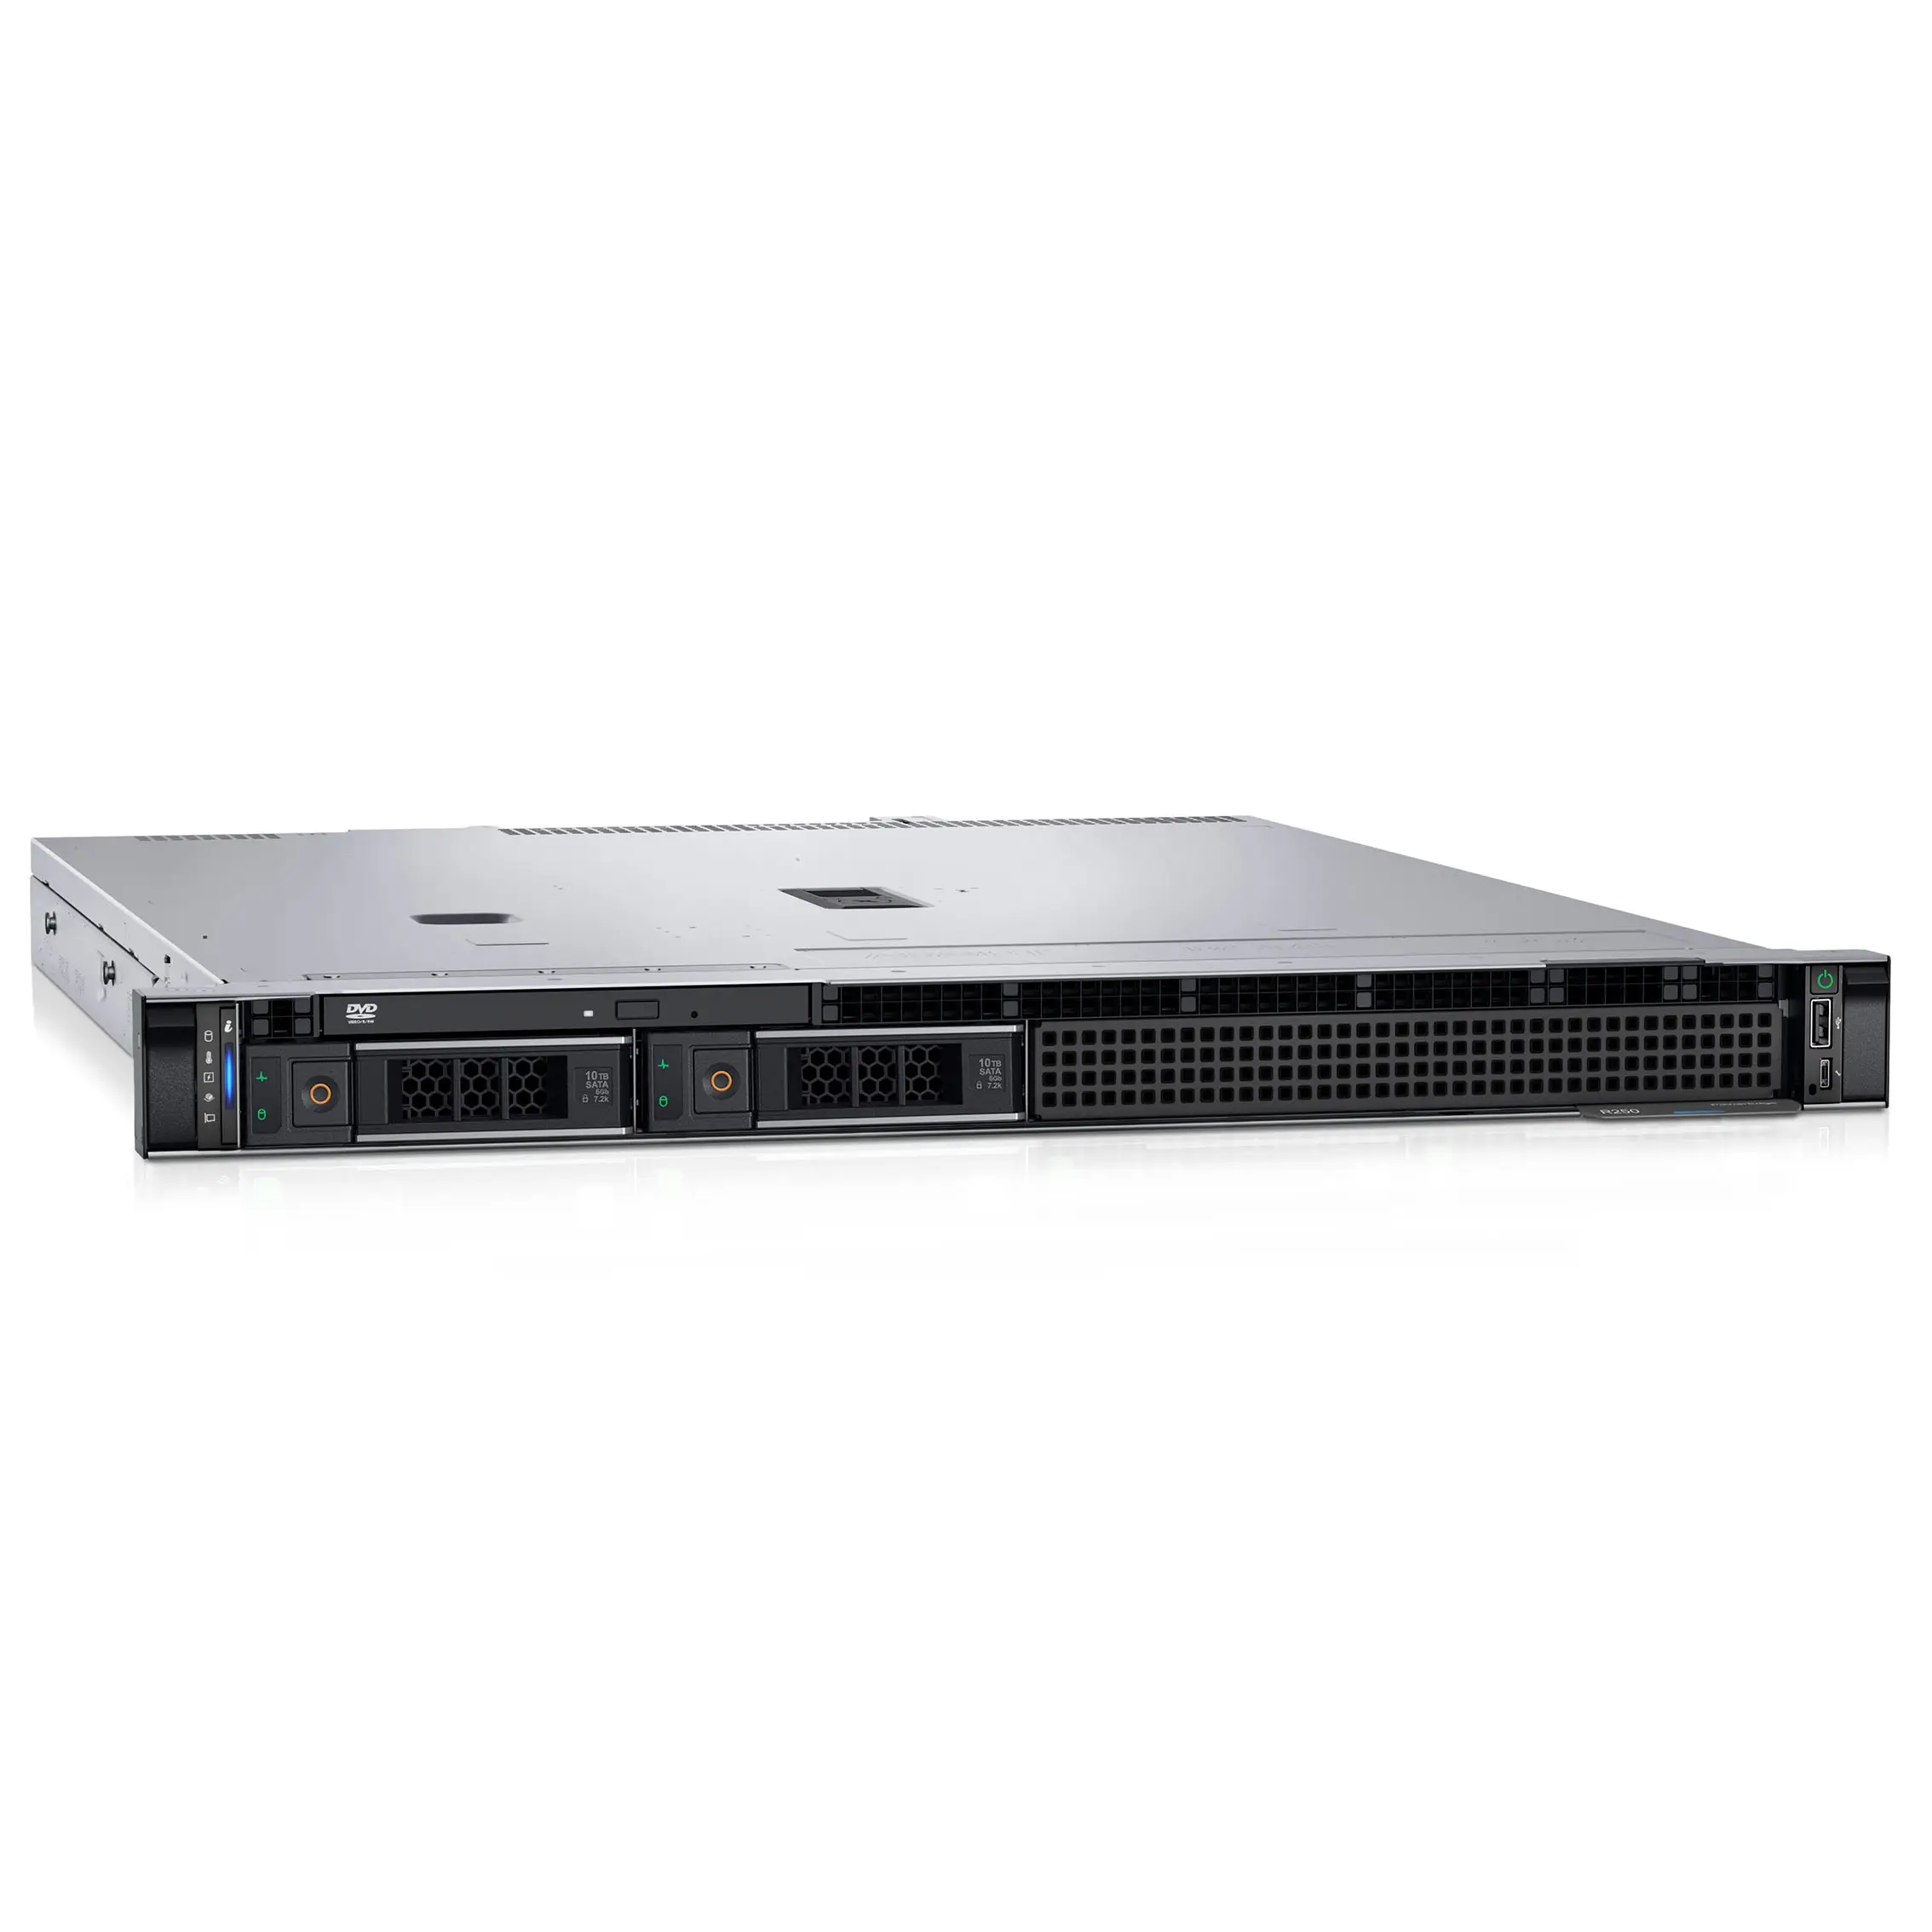 High Quality R250 Dells PowerEdge R250 server 1U CPU Intel Xeon E-2378G 2.8G 8C Processor Rack Server